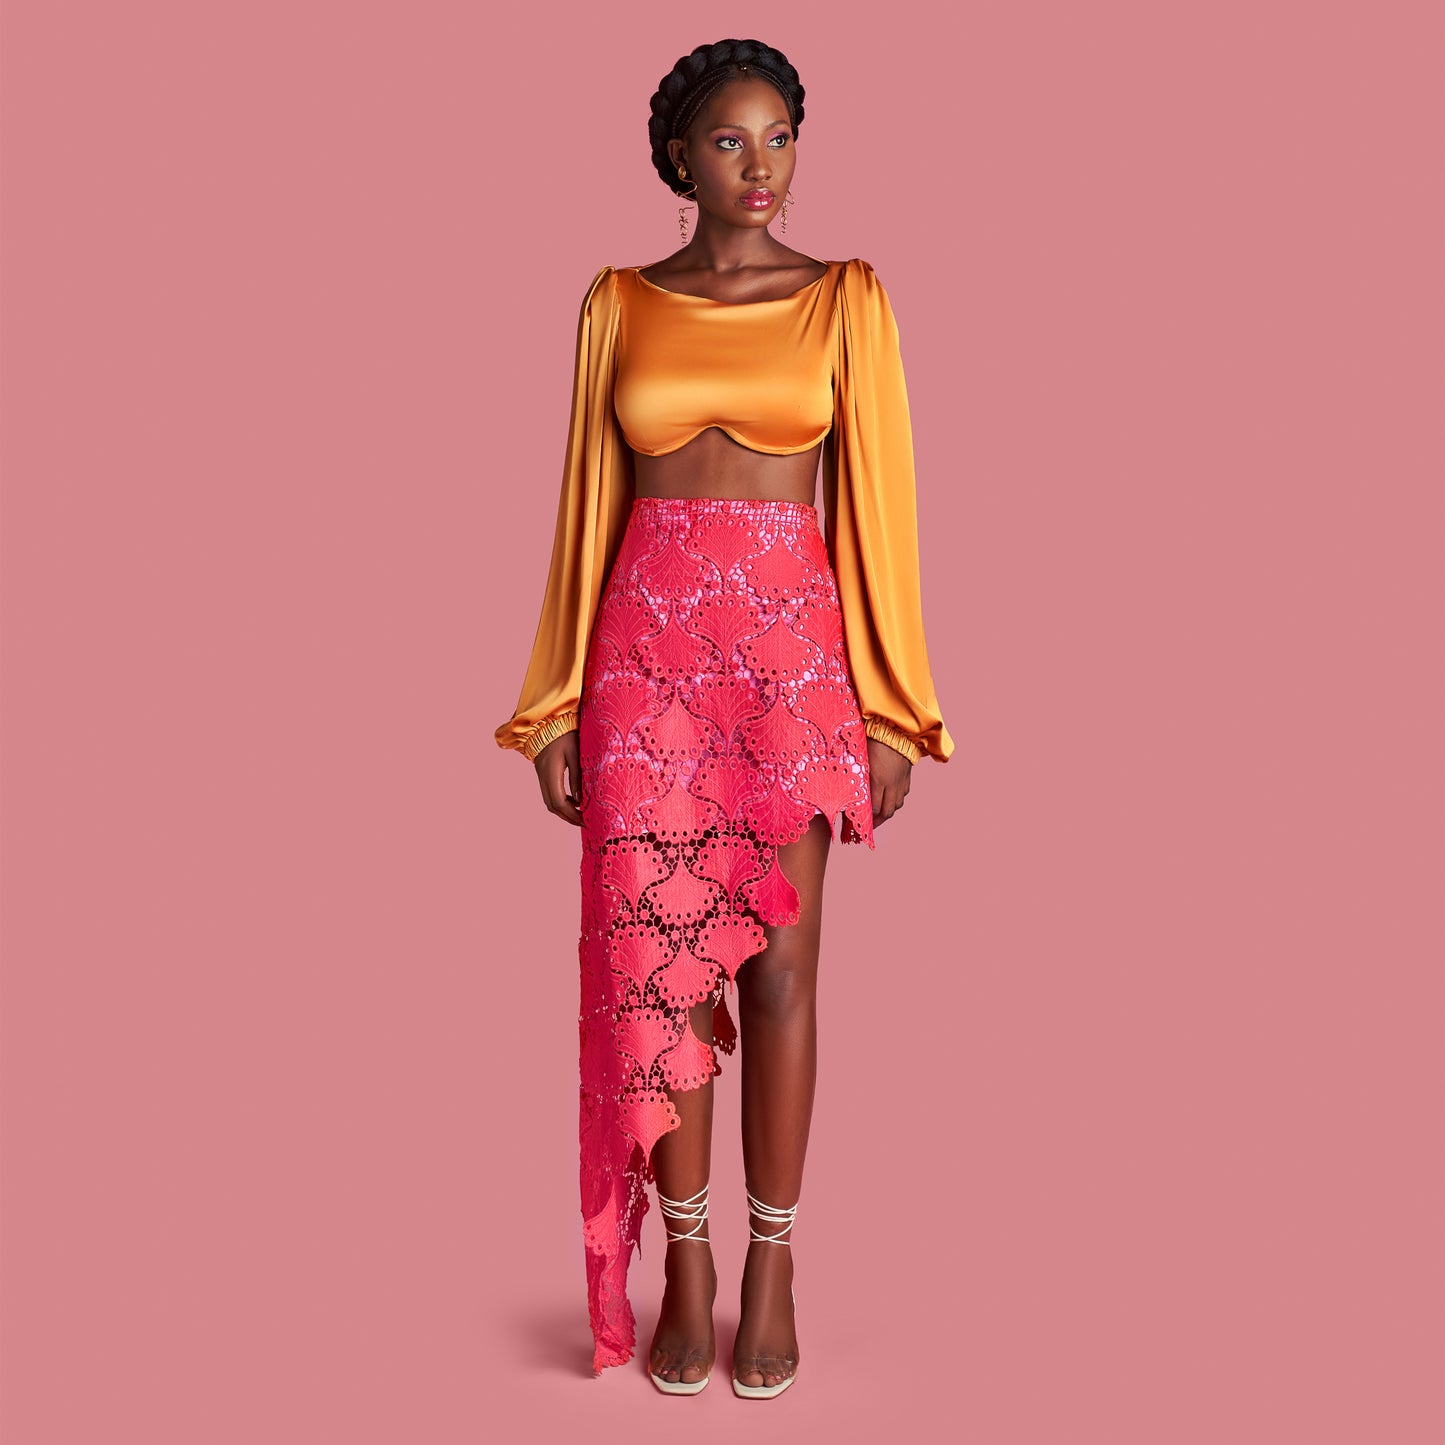 Pink Asymmetrical Lace Skirt